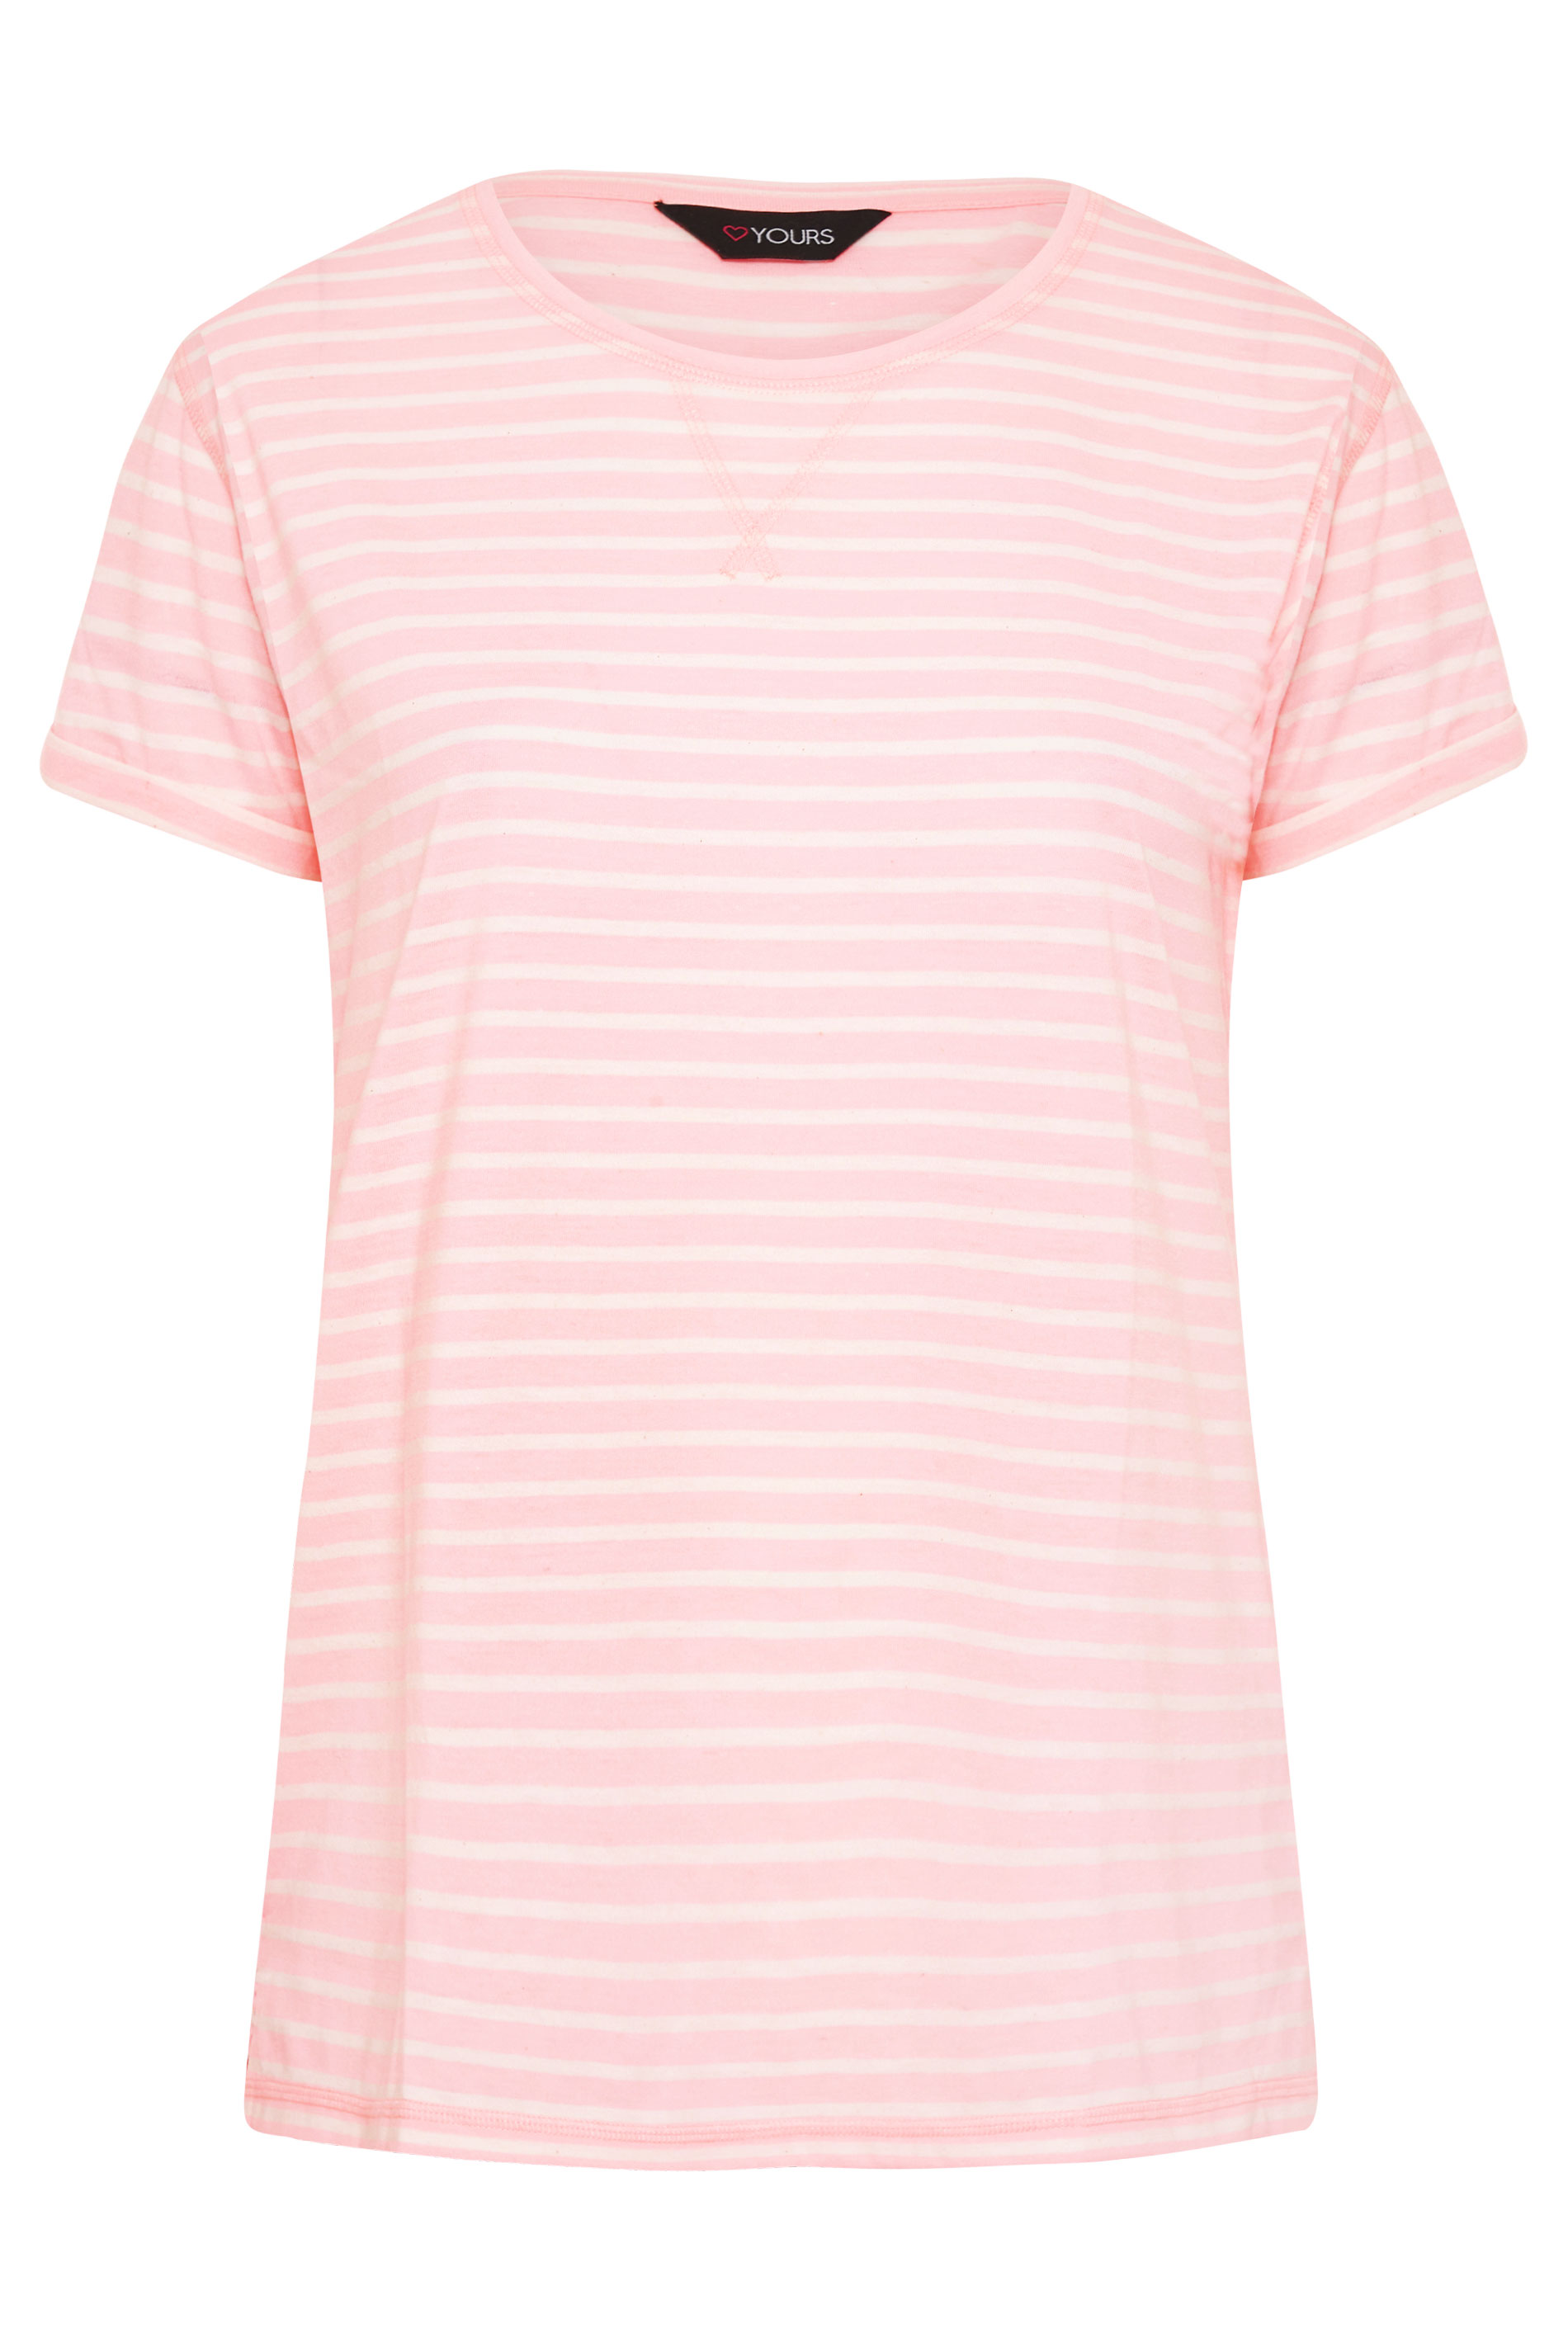 Grande taille  Tops Grande taille  T-Shirts | T-Shirt Rose Basique Imprimé Rayures - HB21265